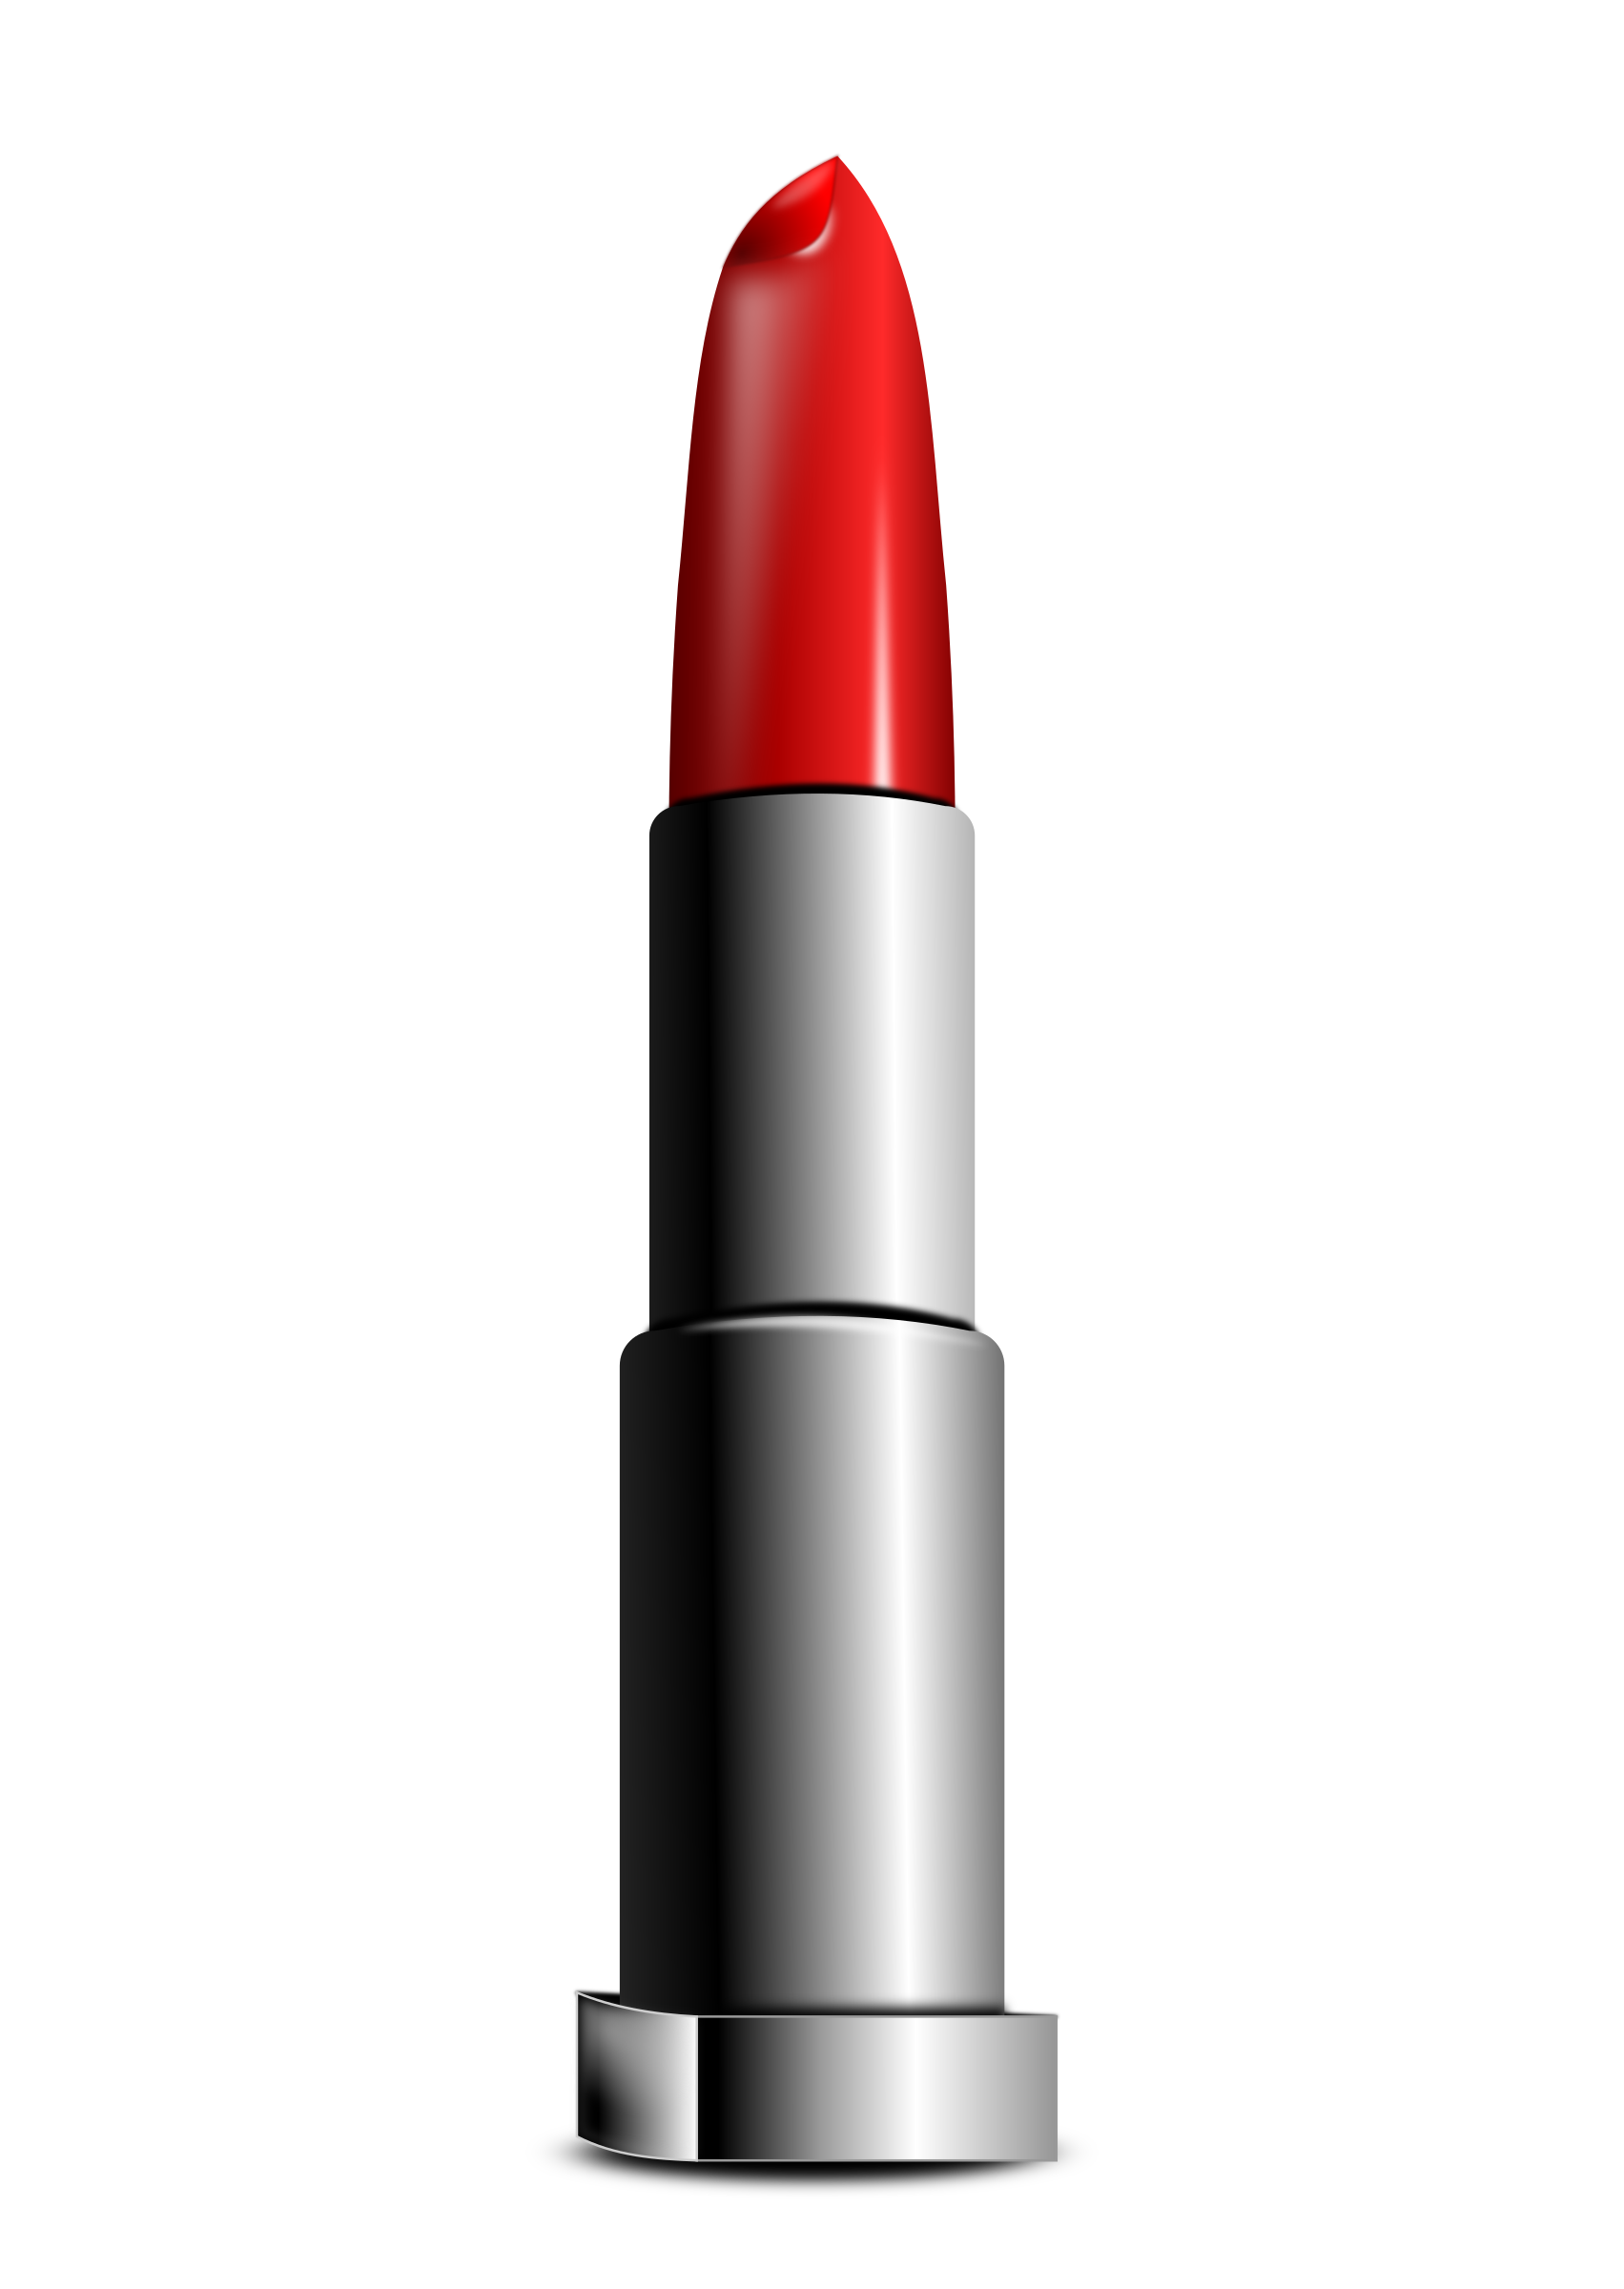 clipart images lipstick